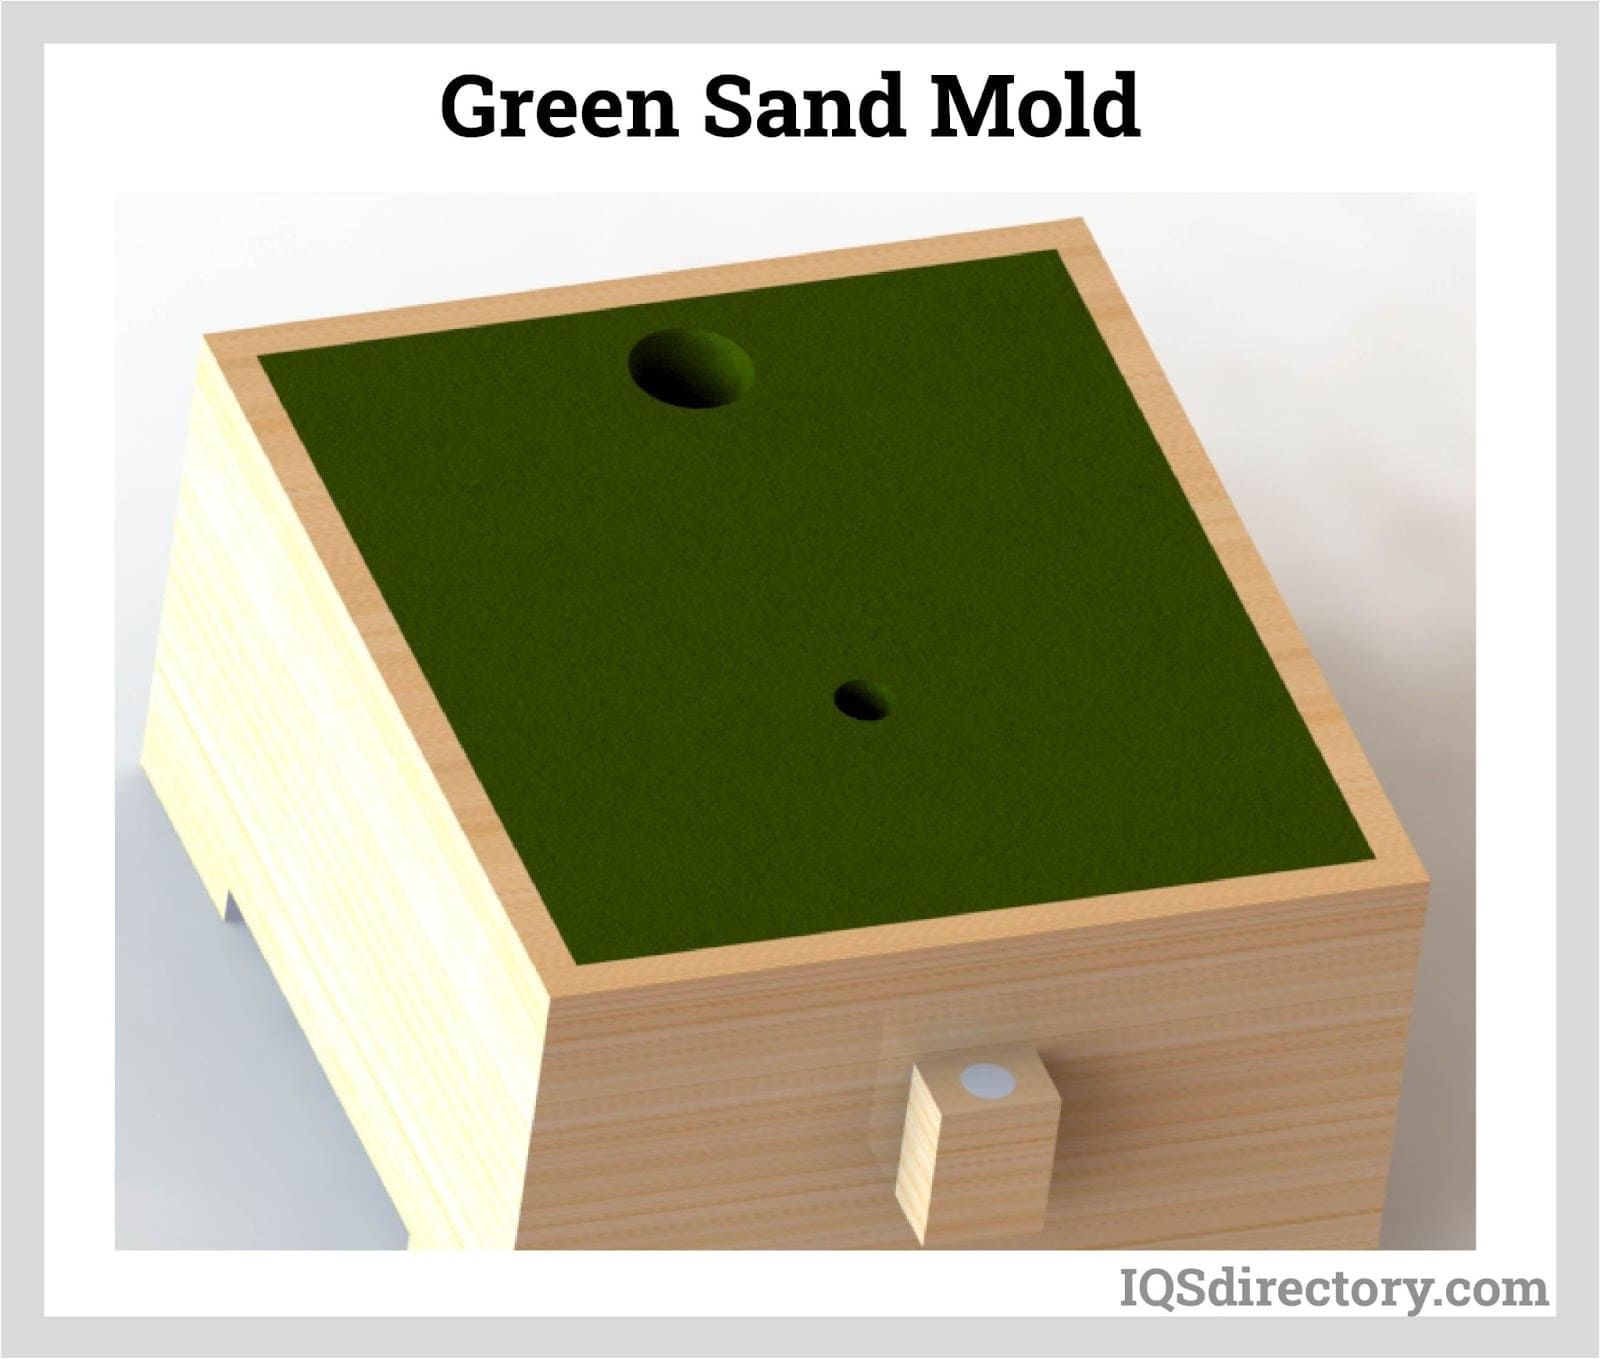 Green Sand Mold